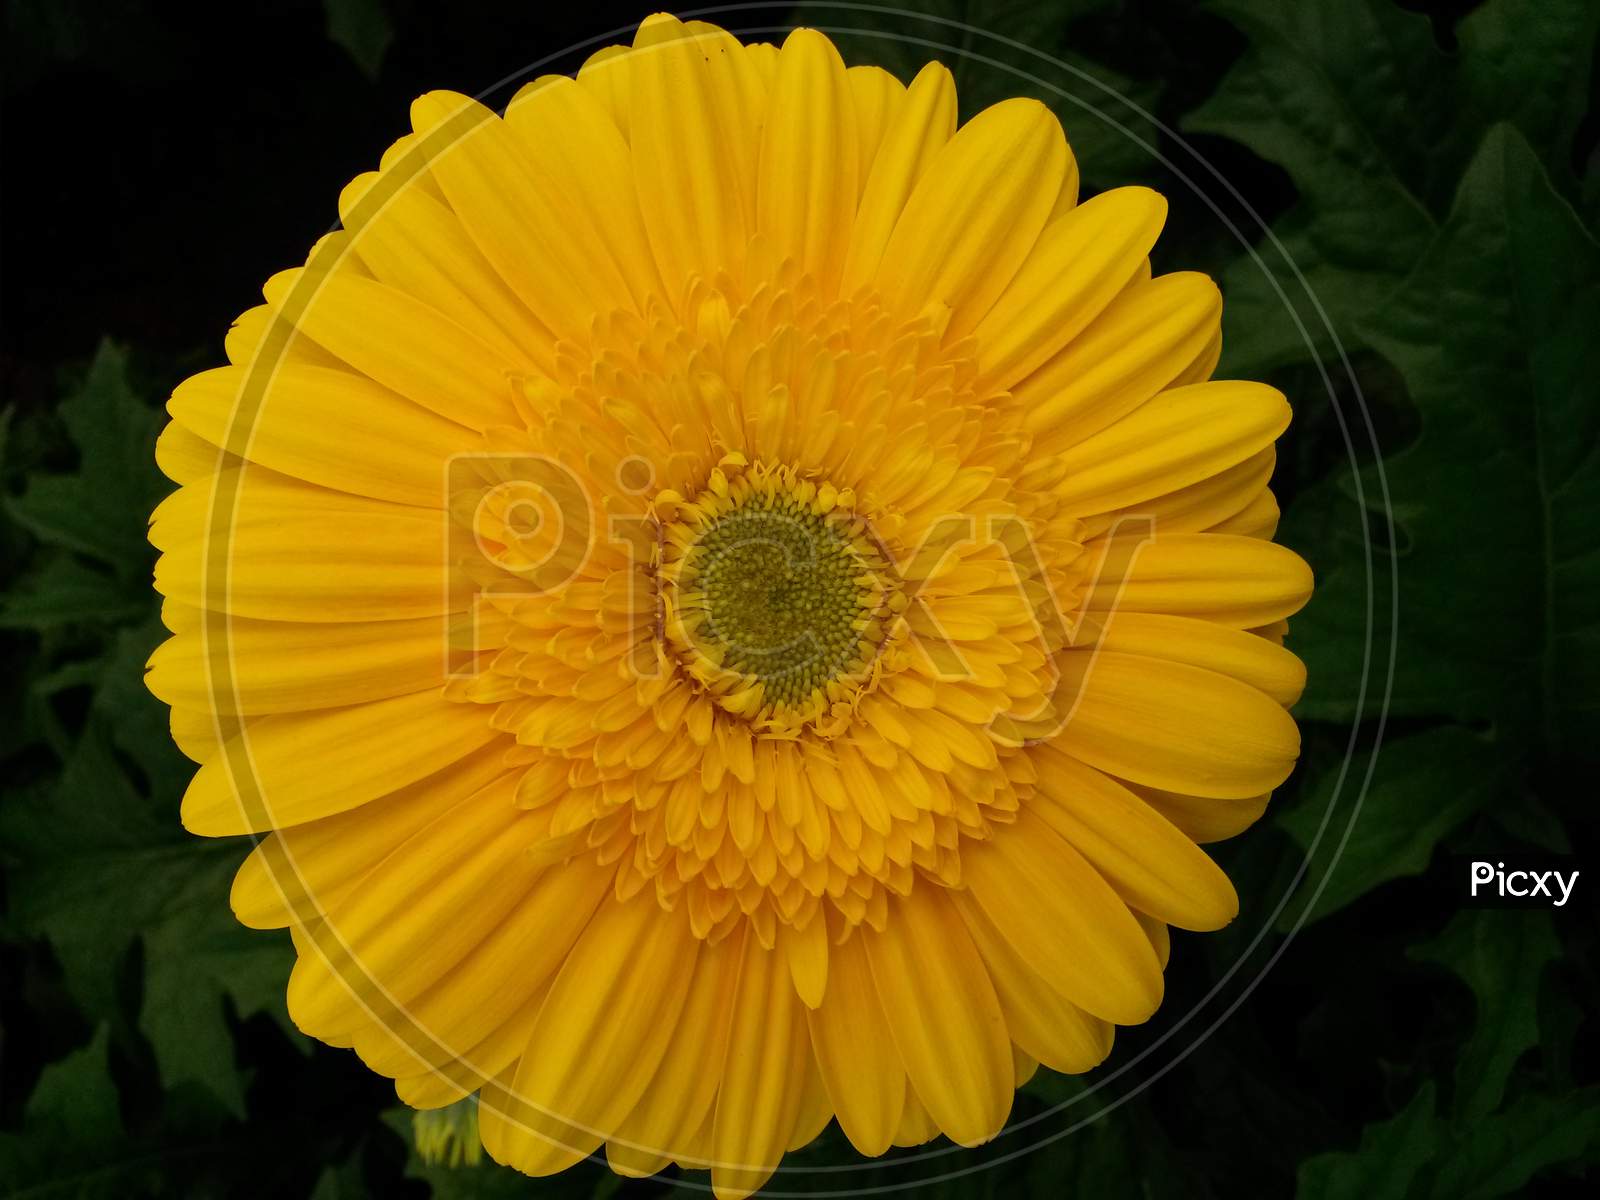 Yellow Gerbera Flower With Green Center Core